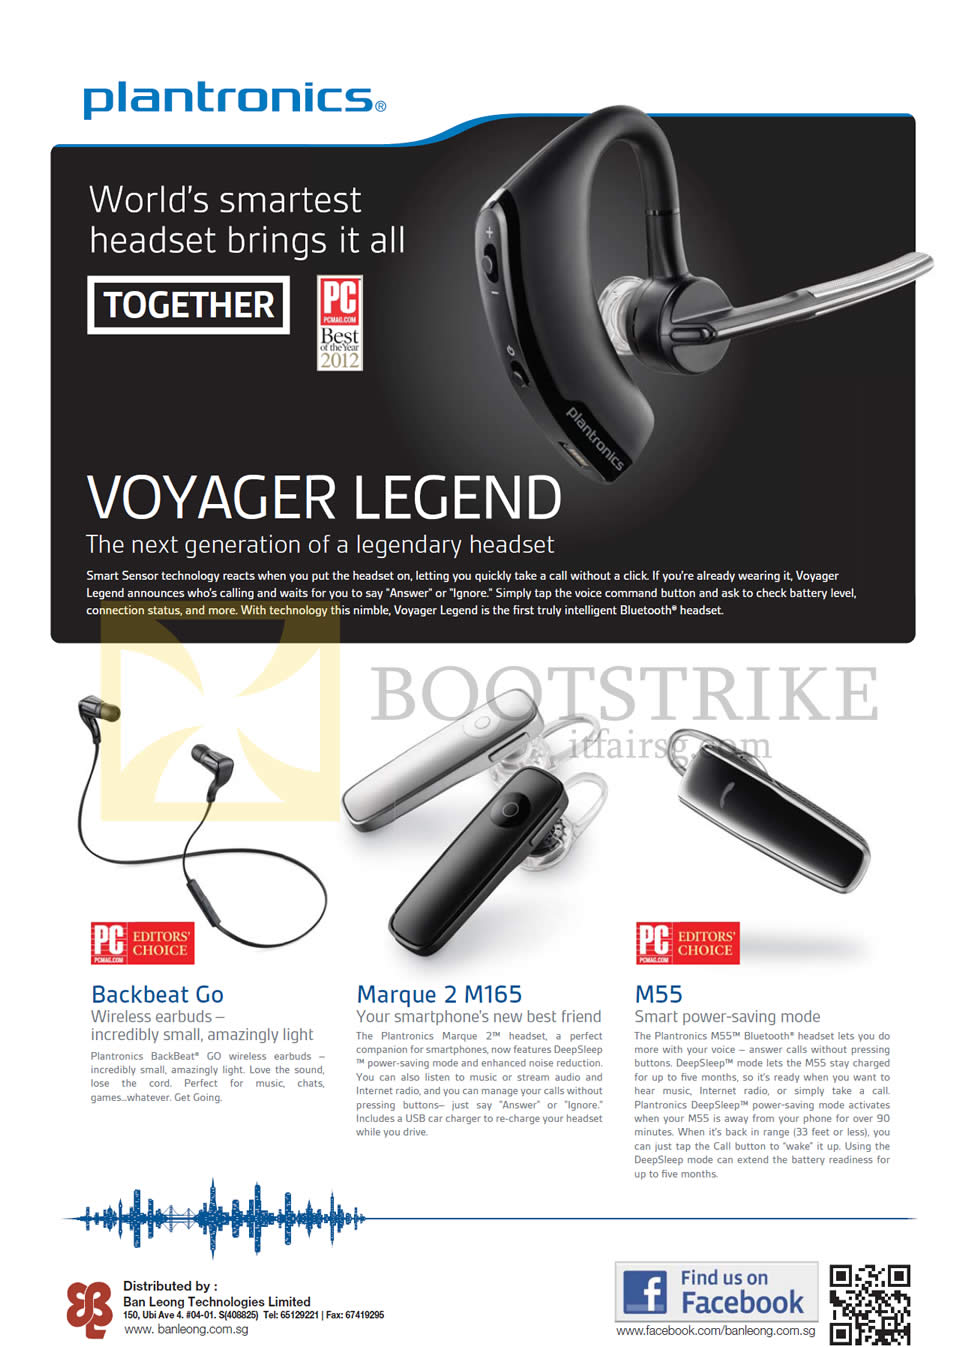 PC SHOW 2013 price list image brochure of Plantronics Bluetooth Headsets Features Voyager Legend, Backbeat Go, 903 Plus, Marque 2 M165, M55